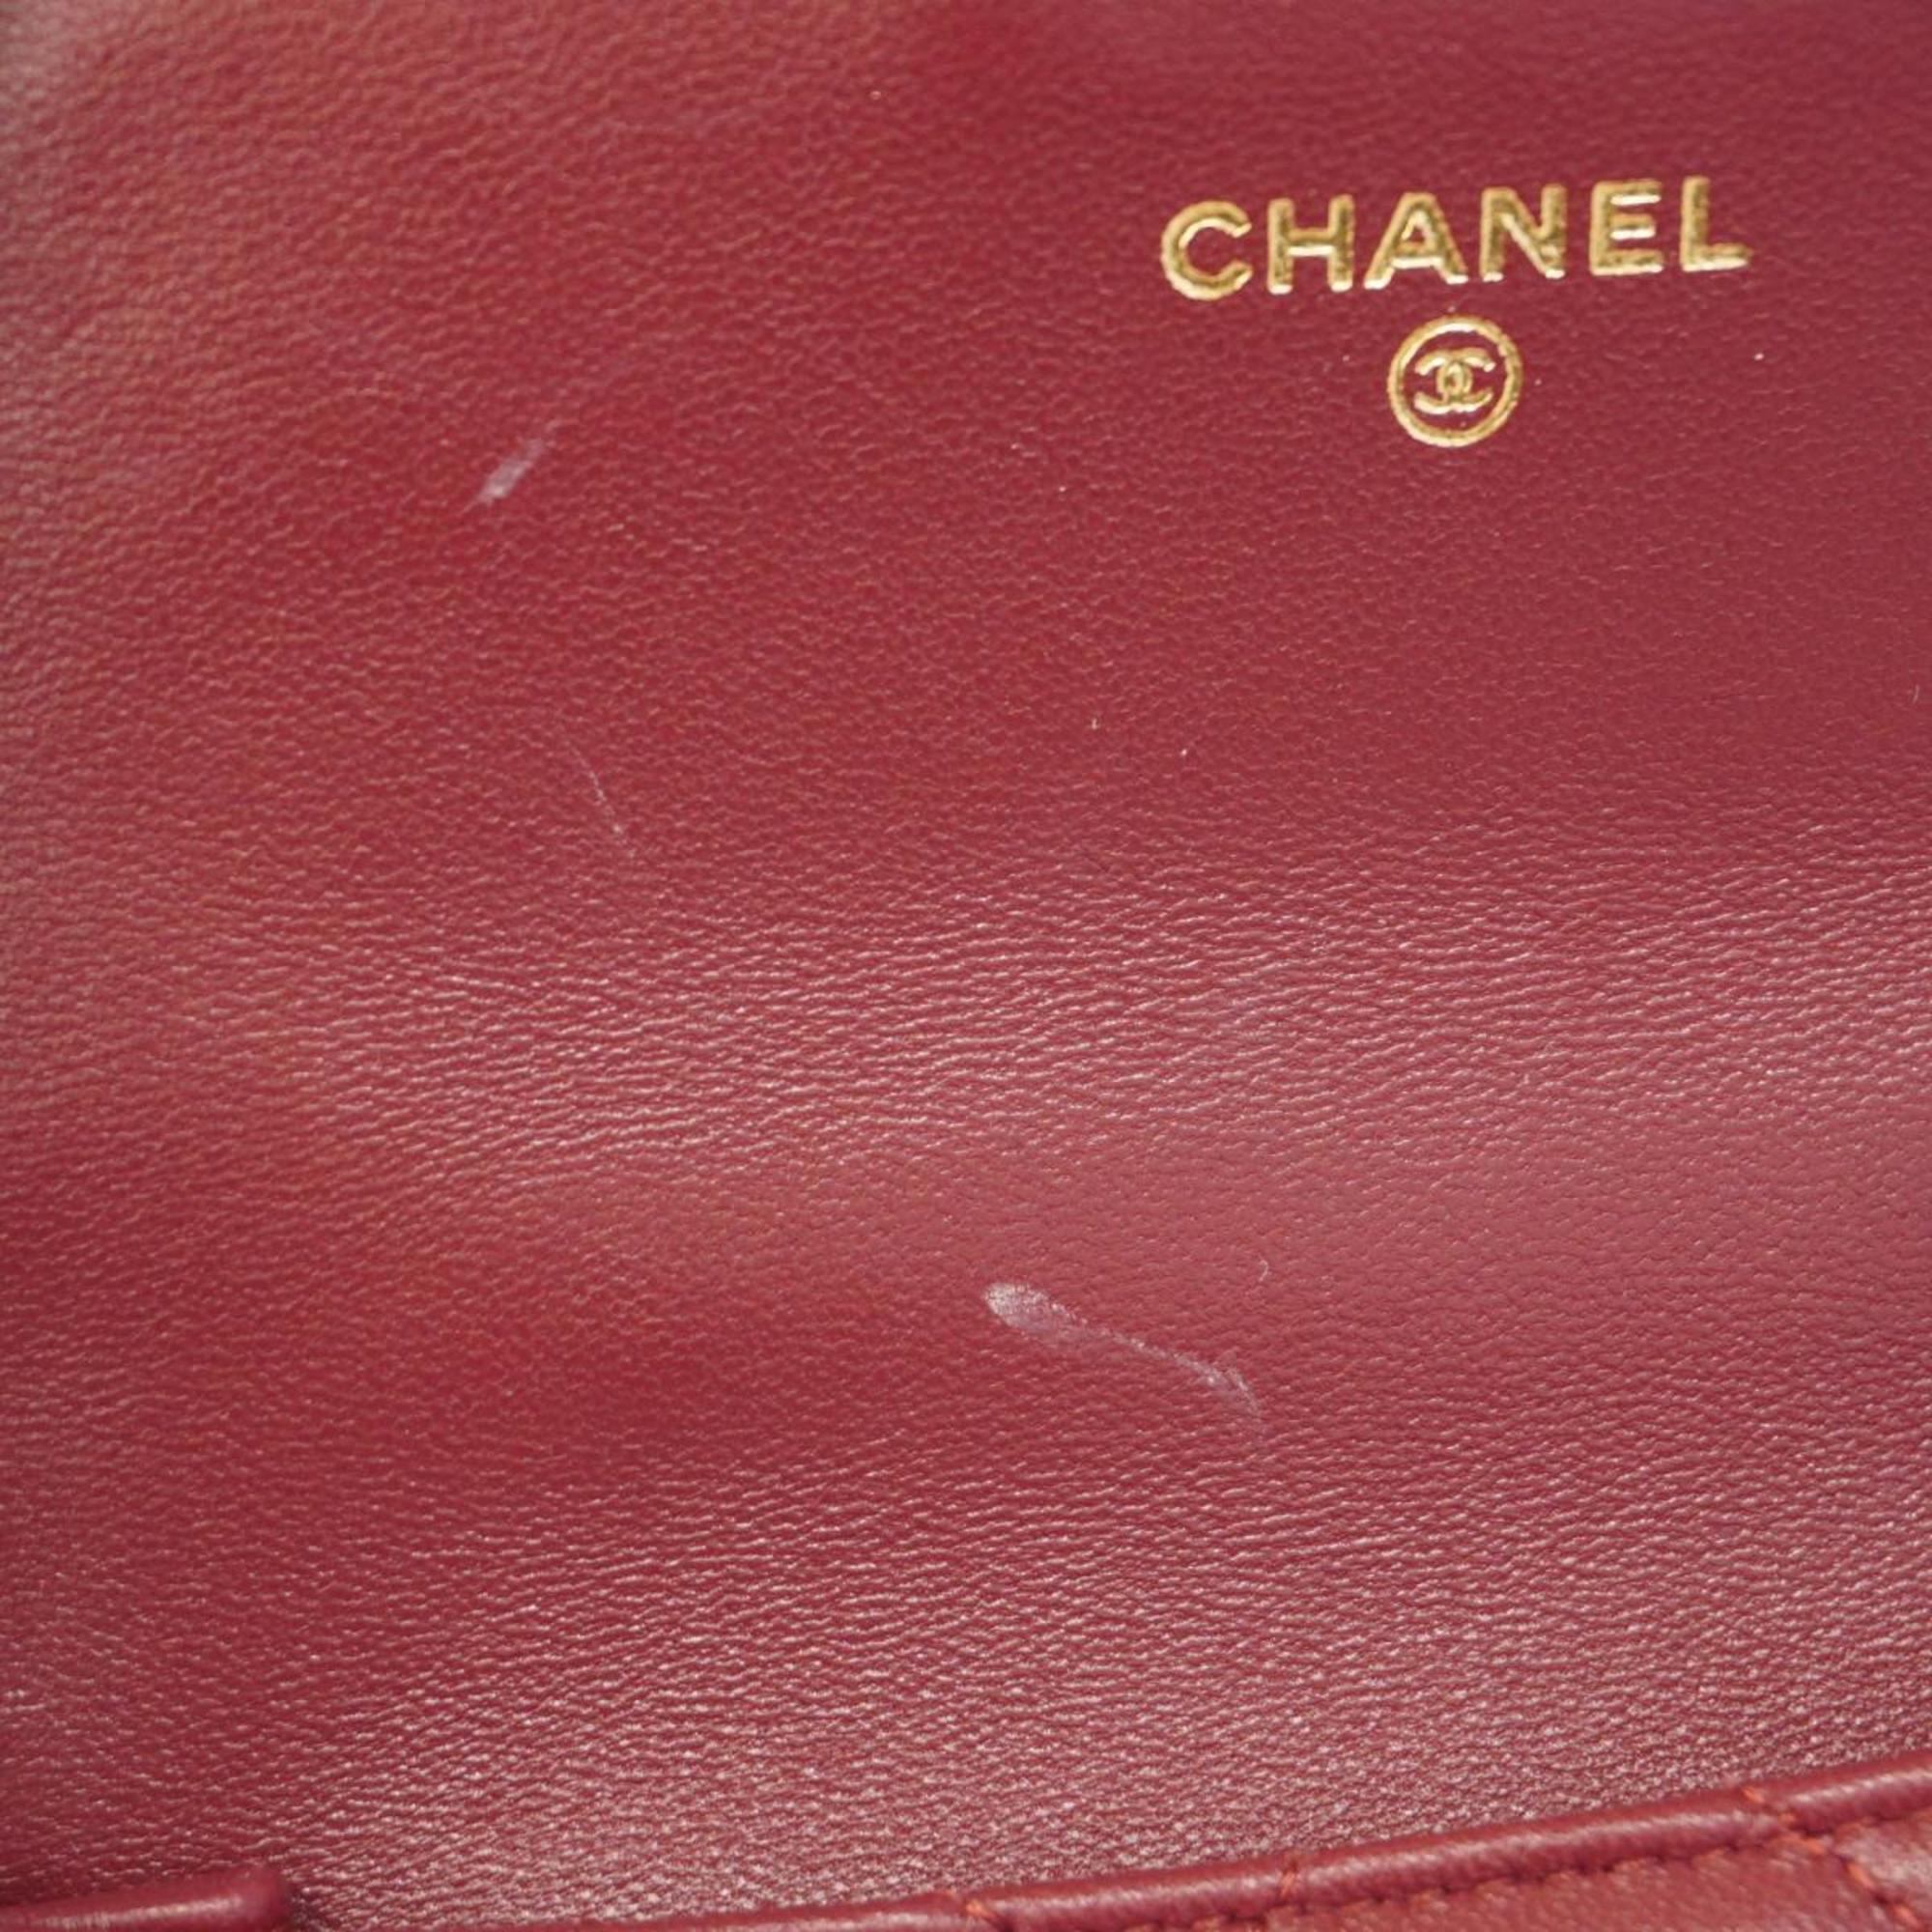 Chanel handbag, Matelasse, chain shoulder, lambskin, Bordeaux, champagne, women's